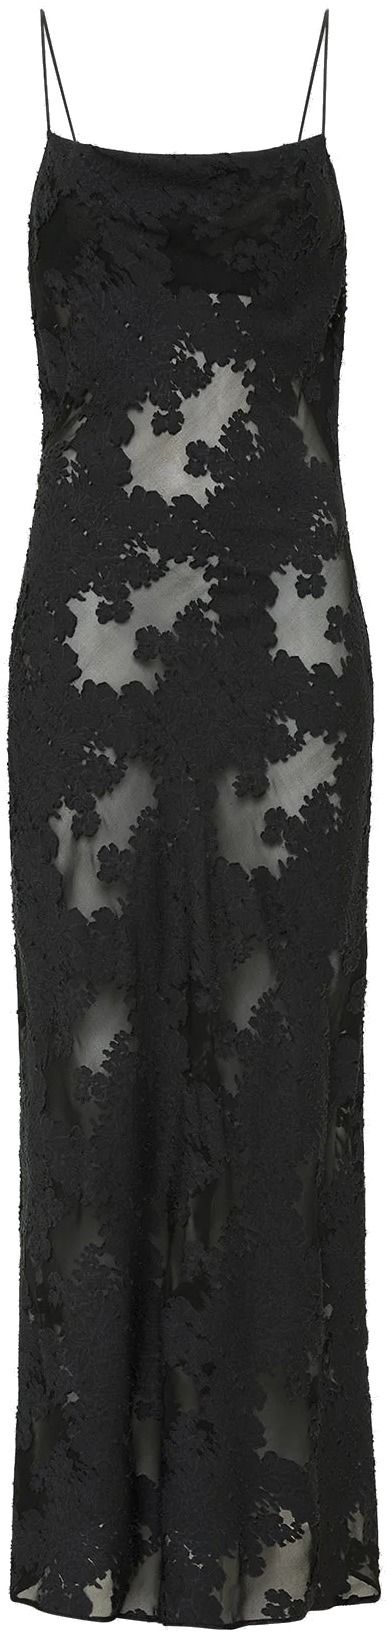 Dress (Black Sheer Floral) | style